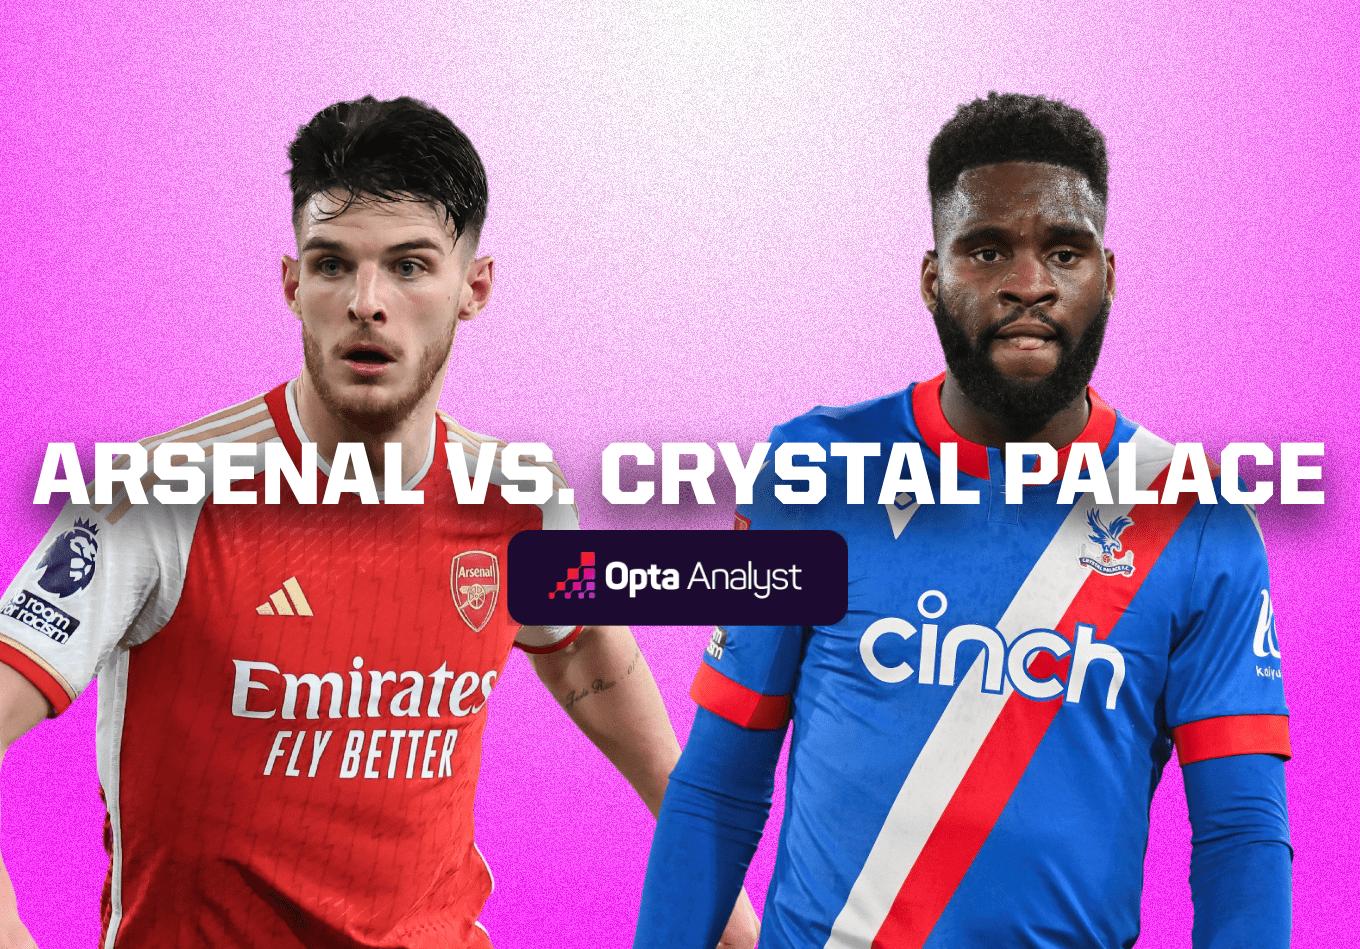 Arsenal vs Crystal Palace: Prediction and Preview